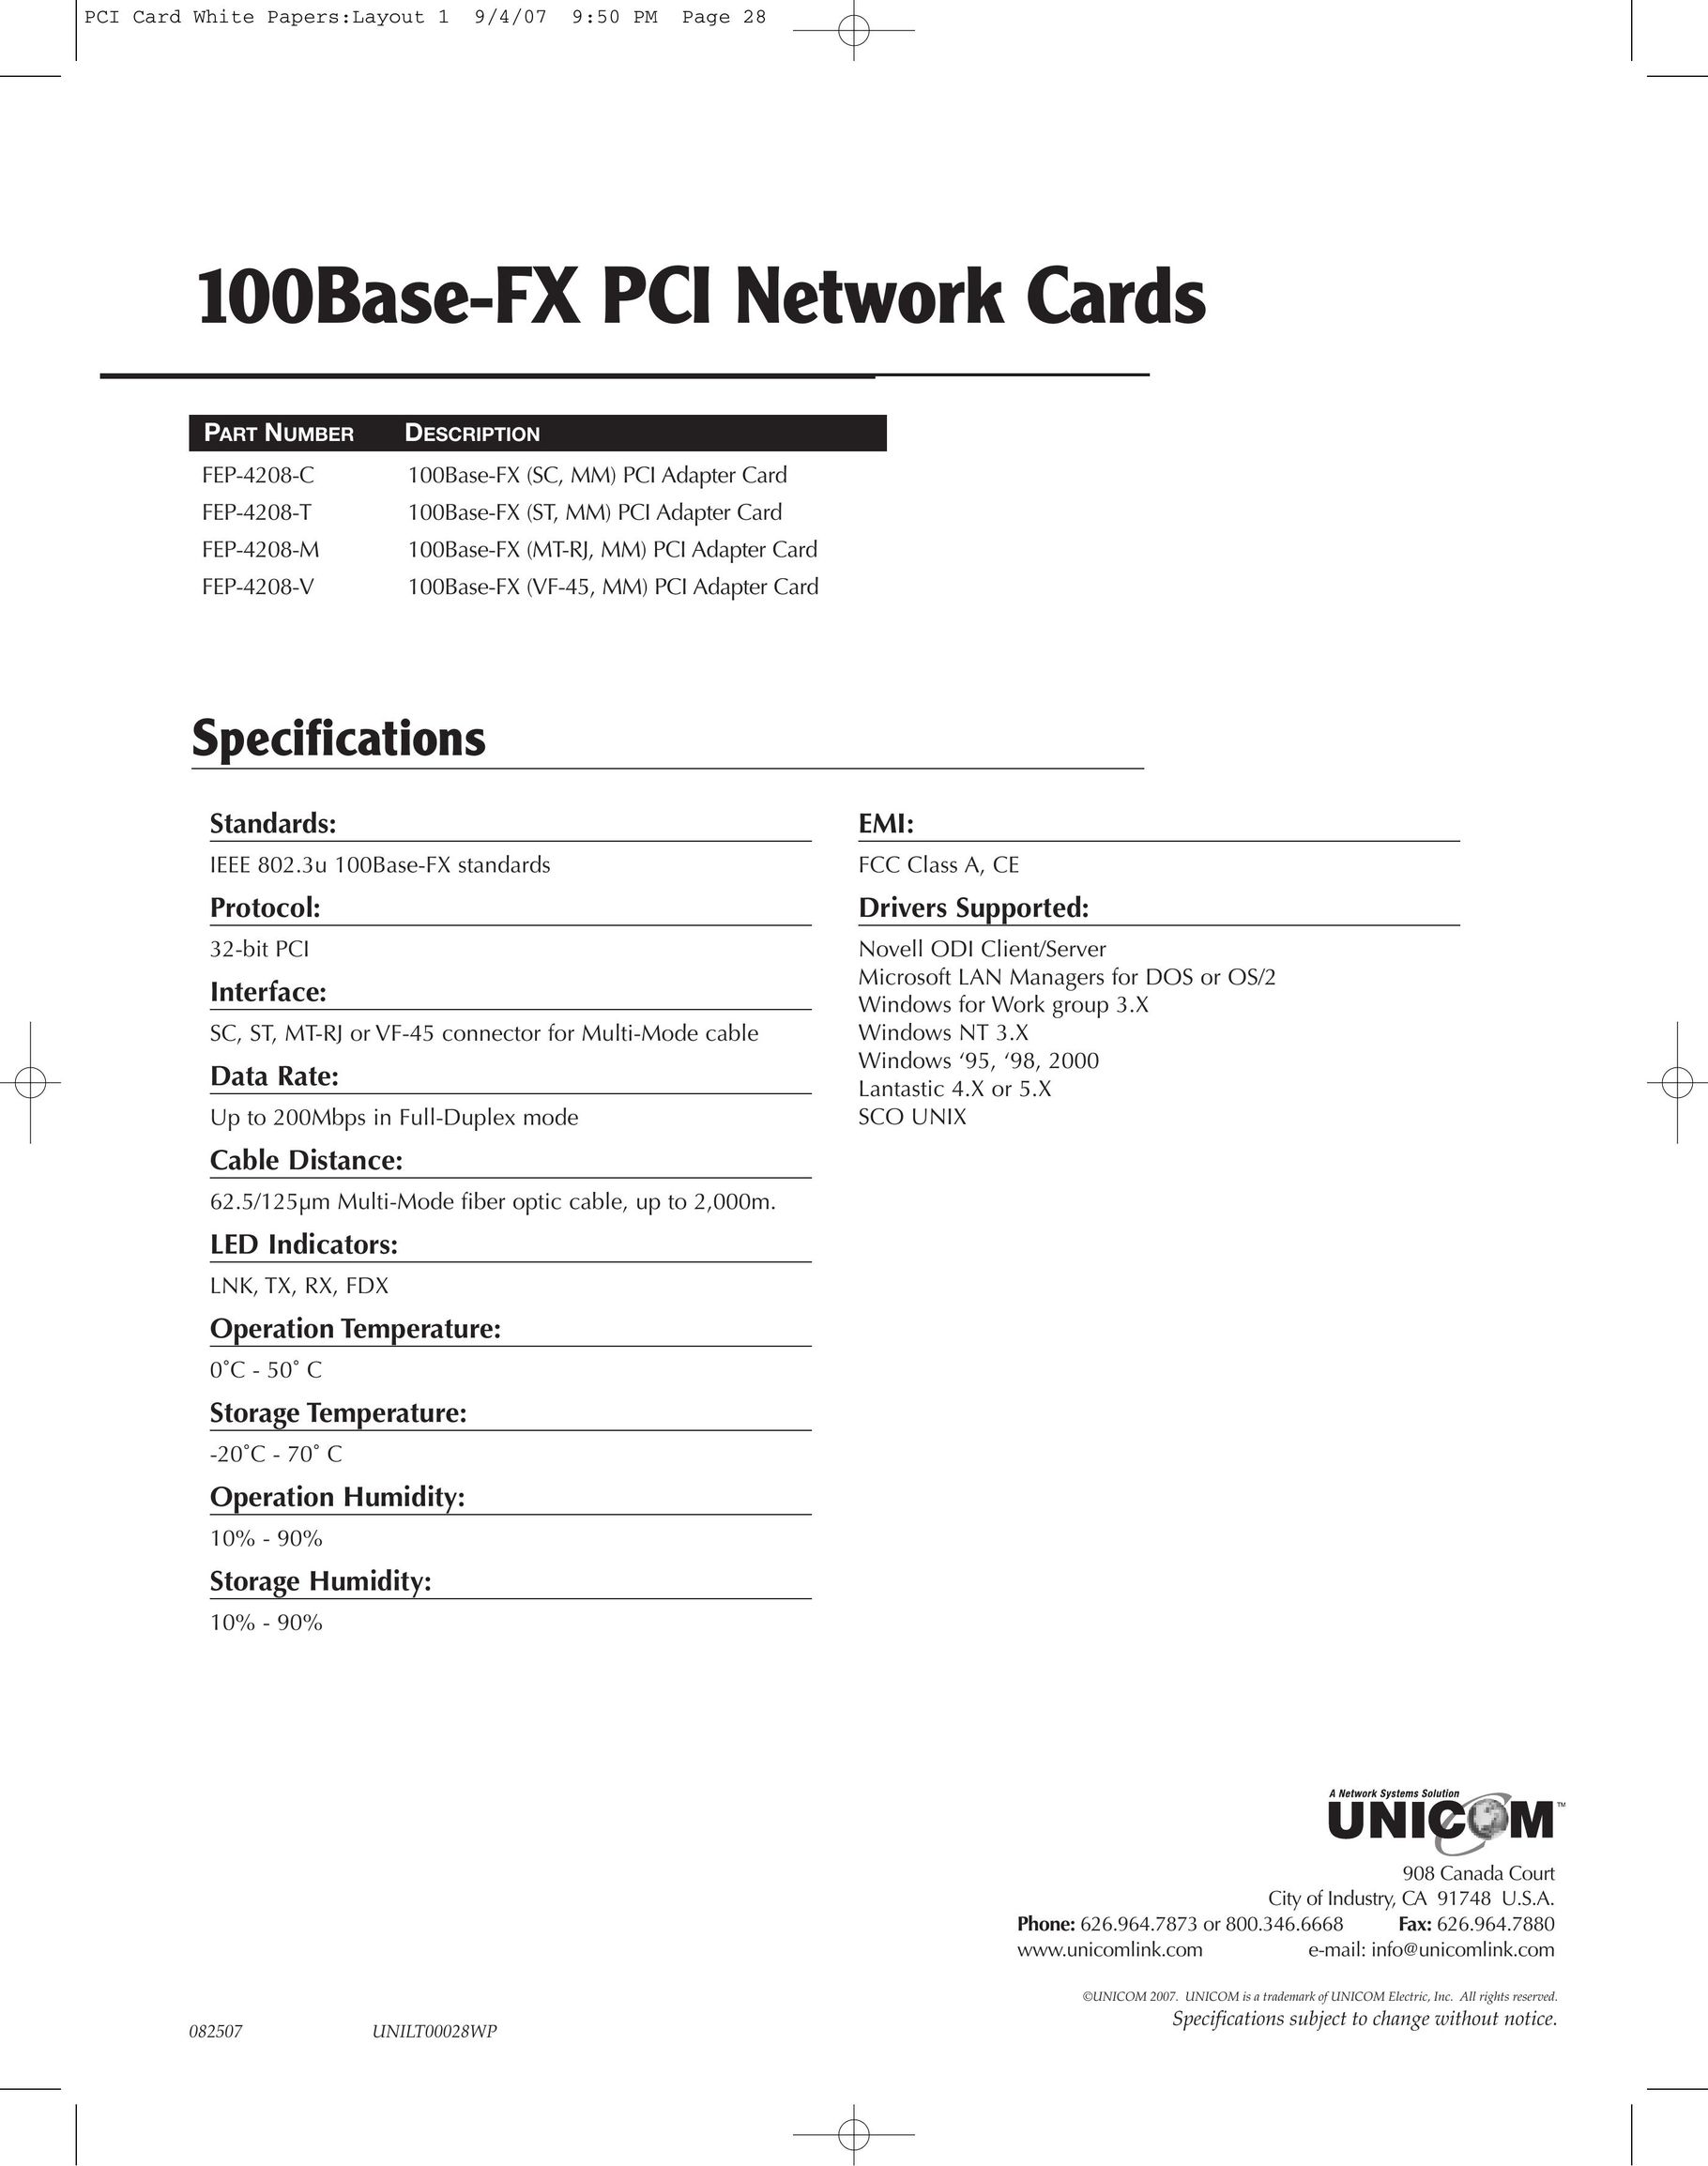 UNICOM Electric FEP-4208-V Network Card User Manual